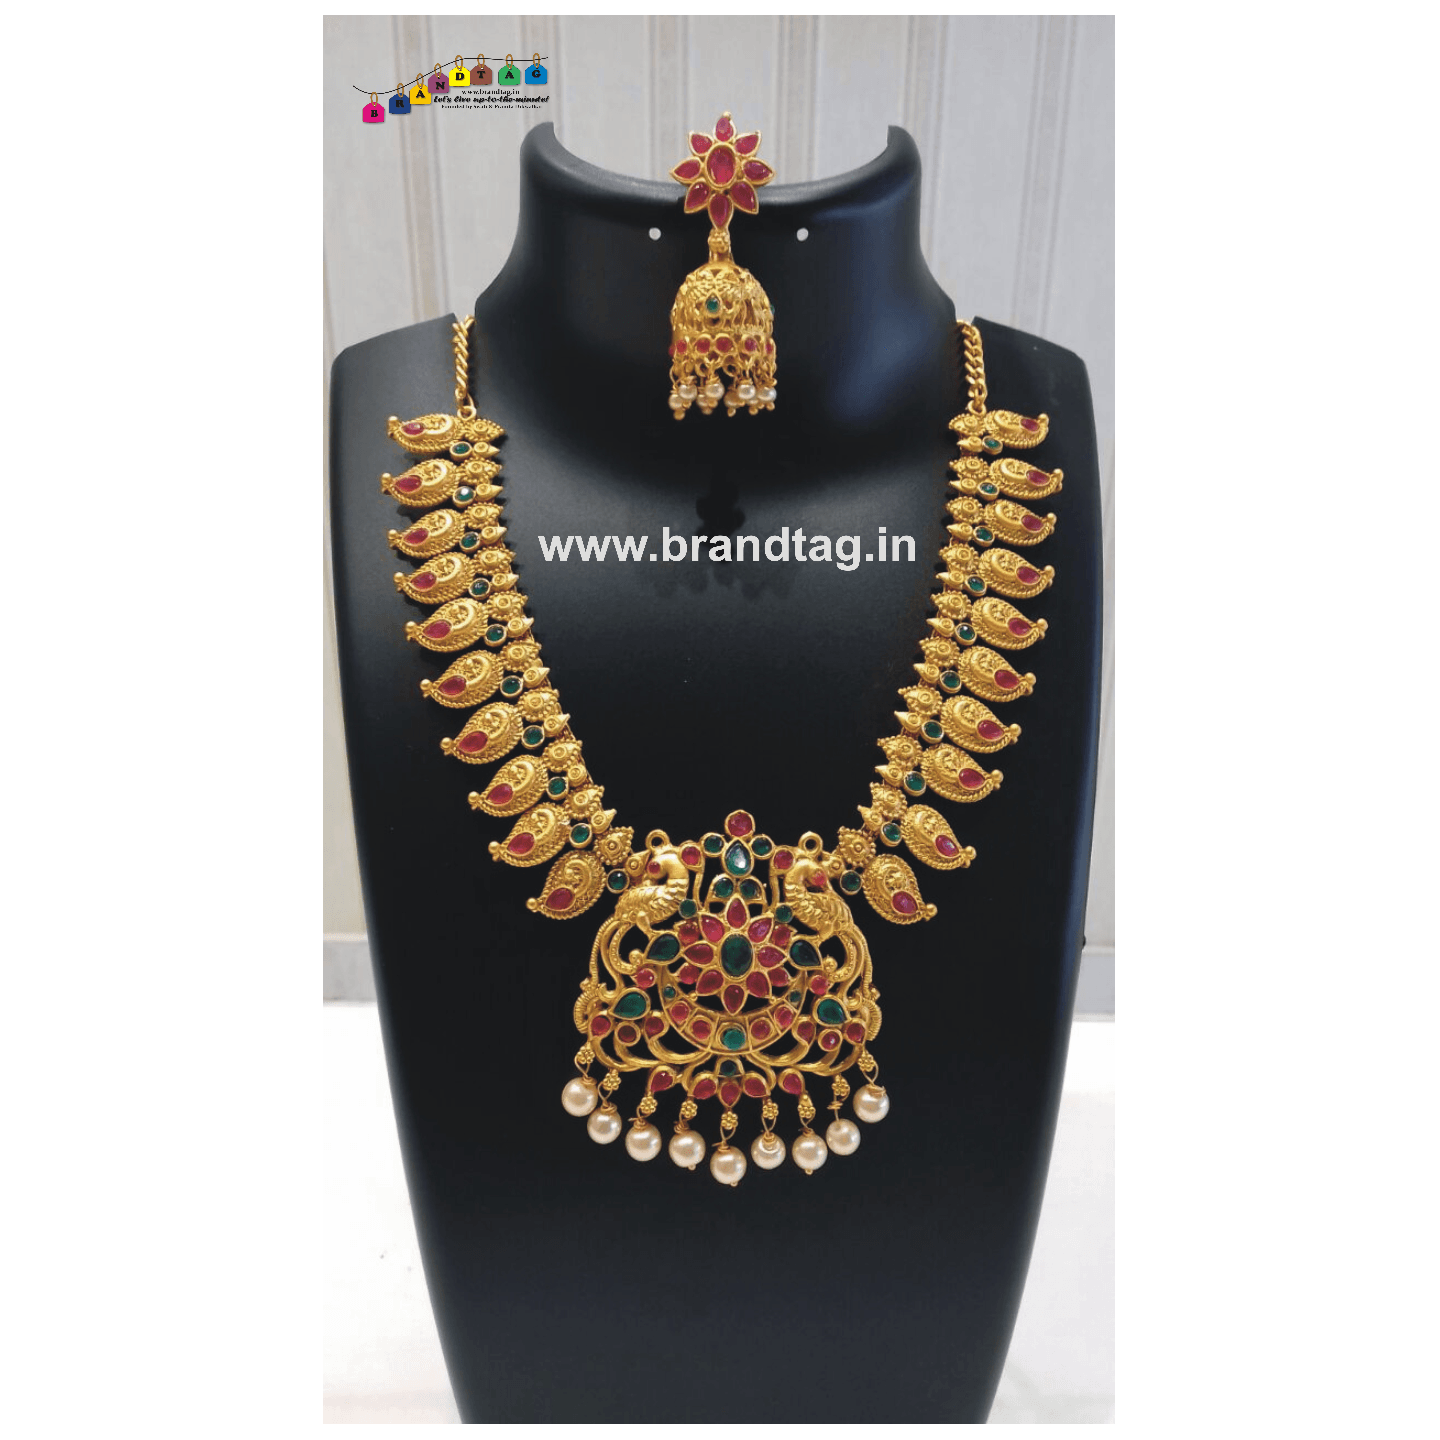 Diwali Collection - Captivating Golden Necklace set!